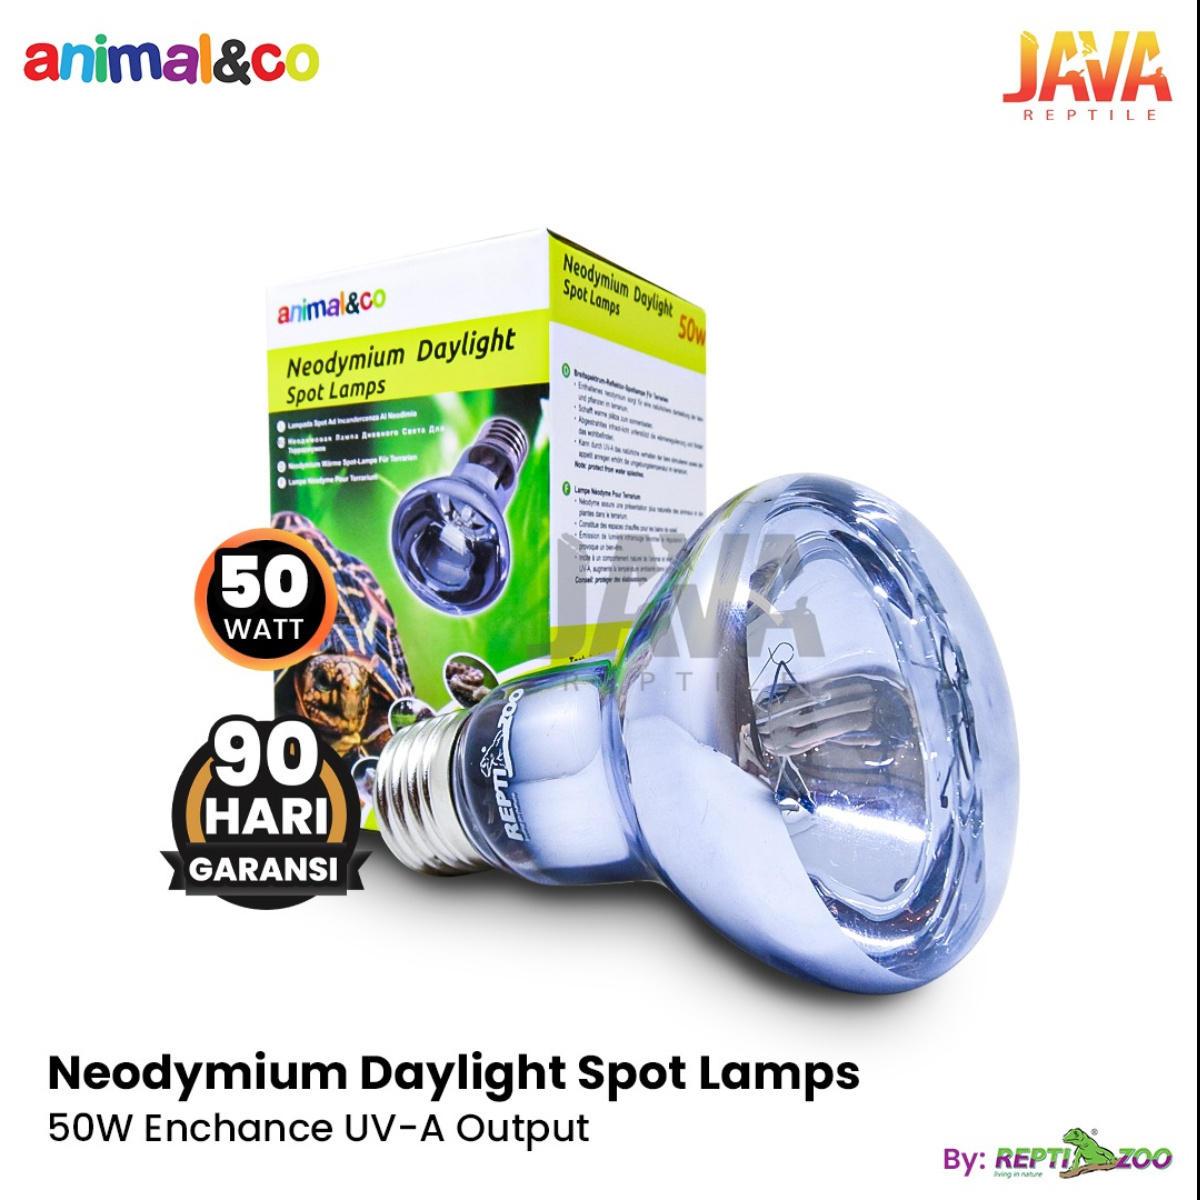 Animal&co Neodymium Daylight Spot Lamp 50 Watt by Reptizoo B63050